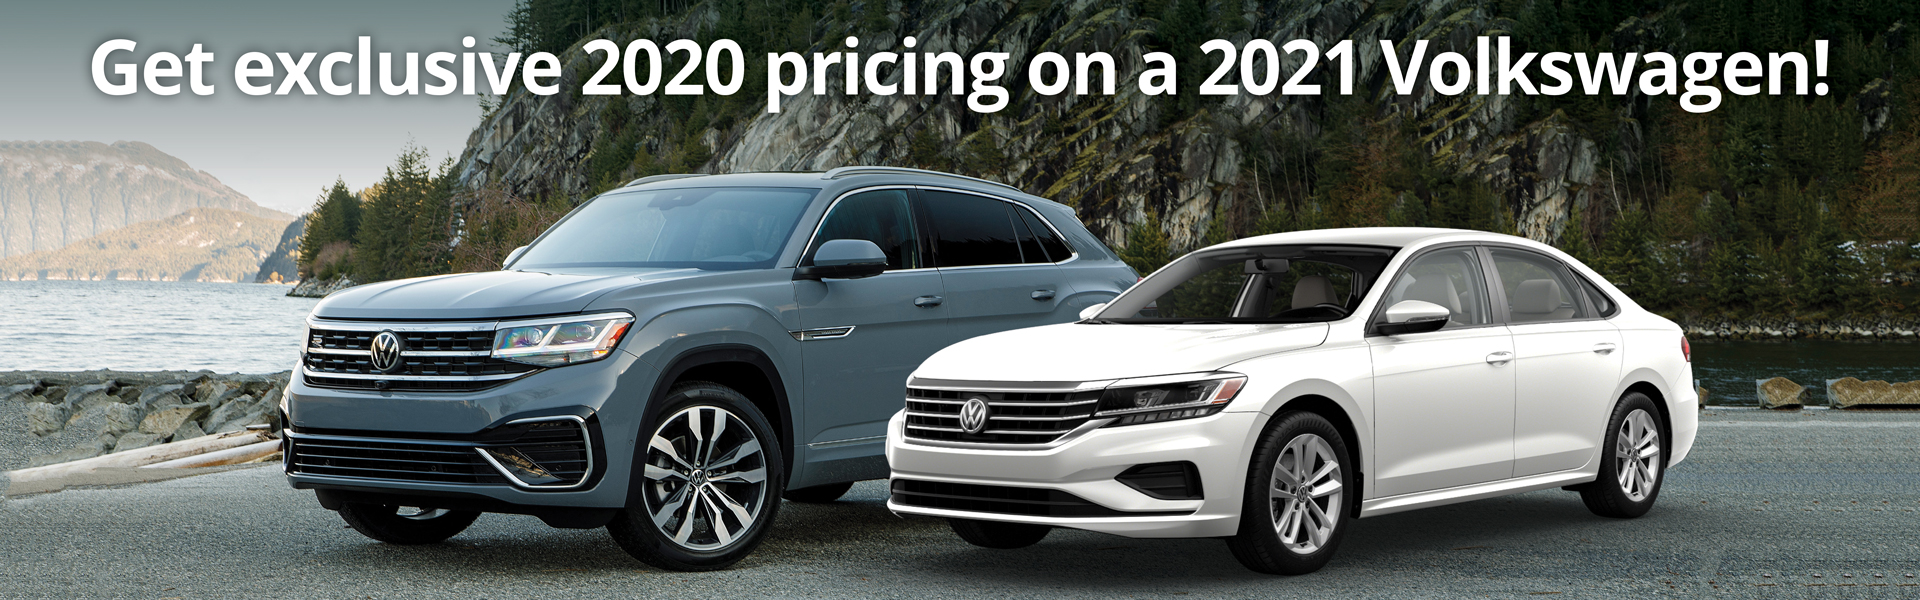 Volkswagen 2021 at 2020 Pricing